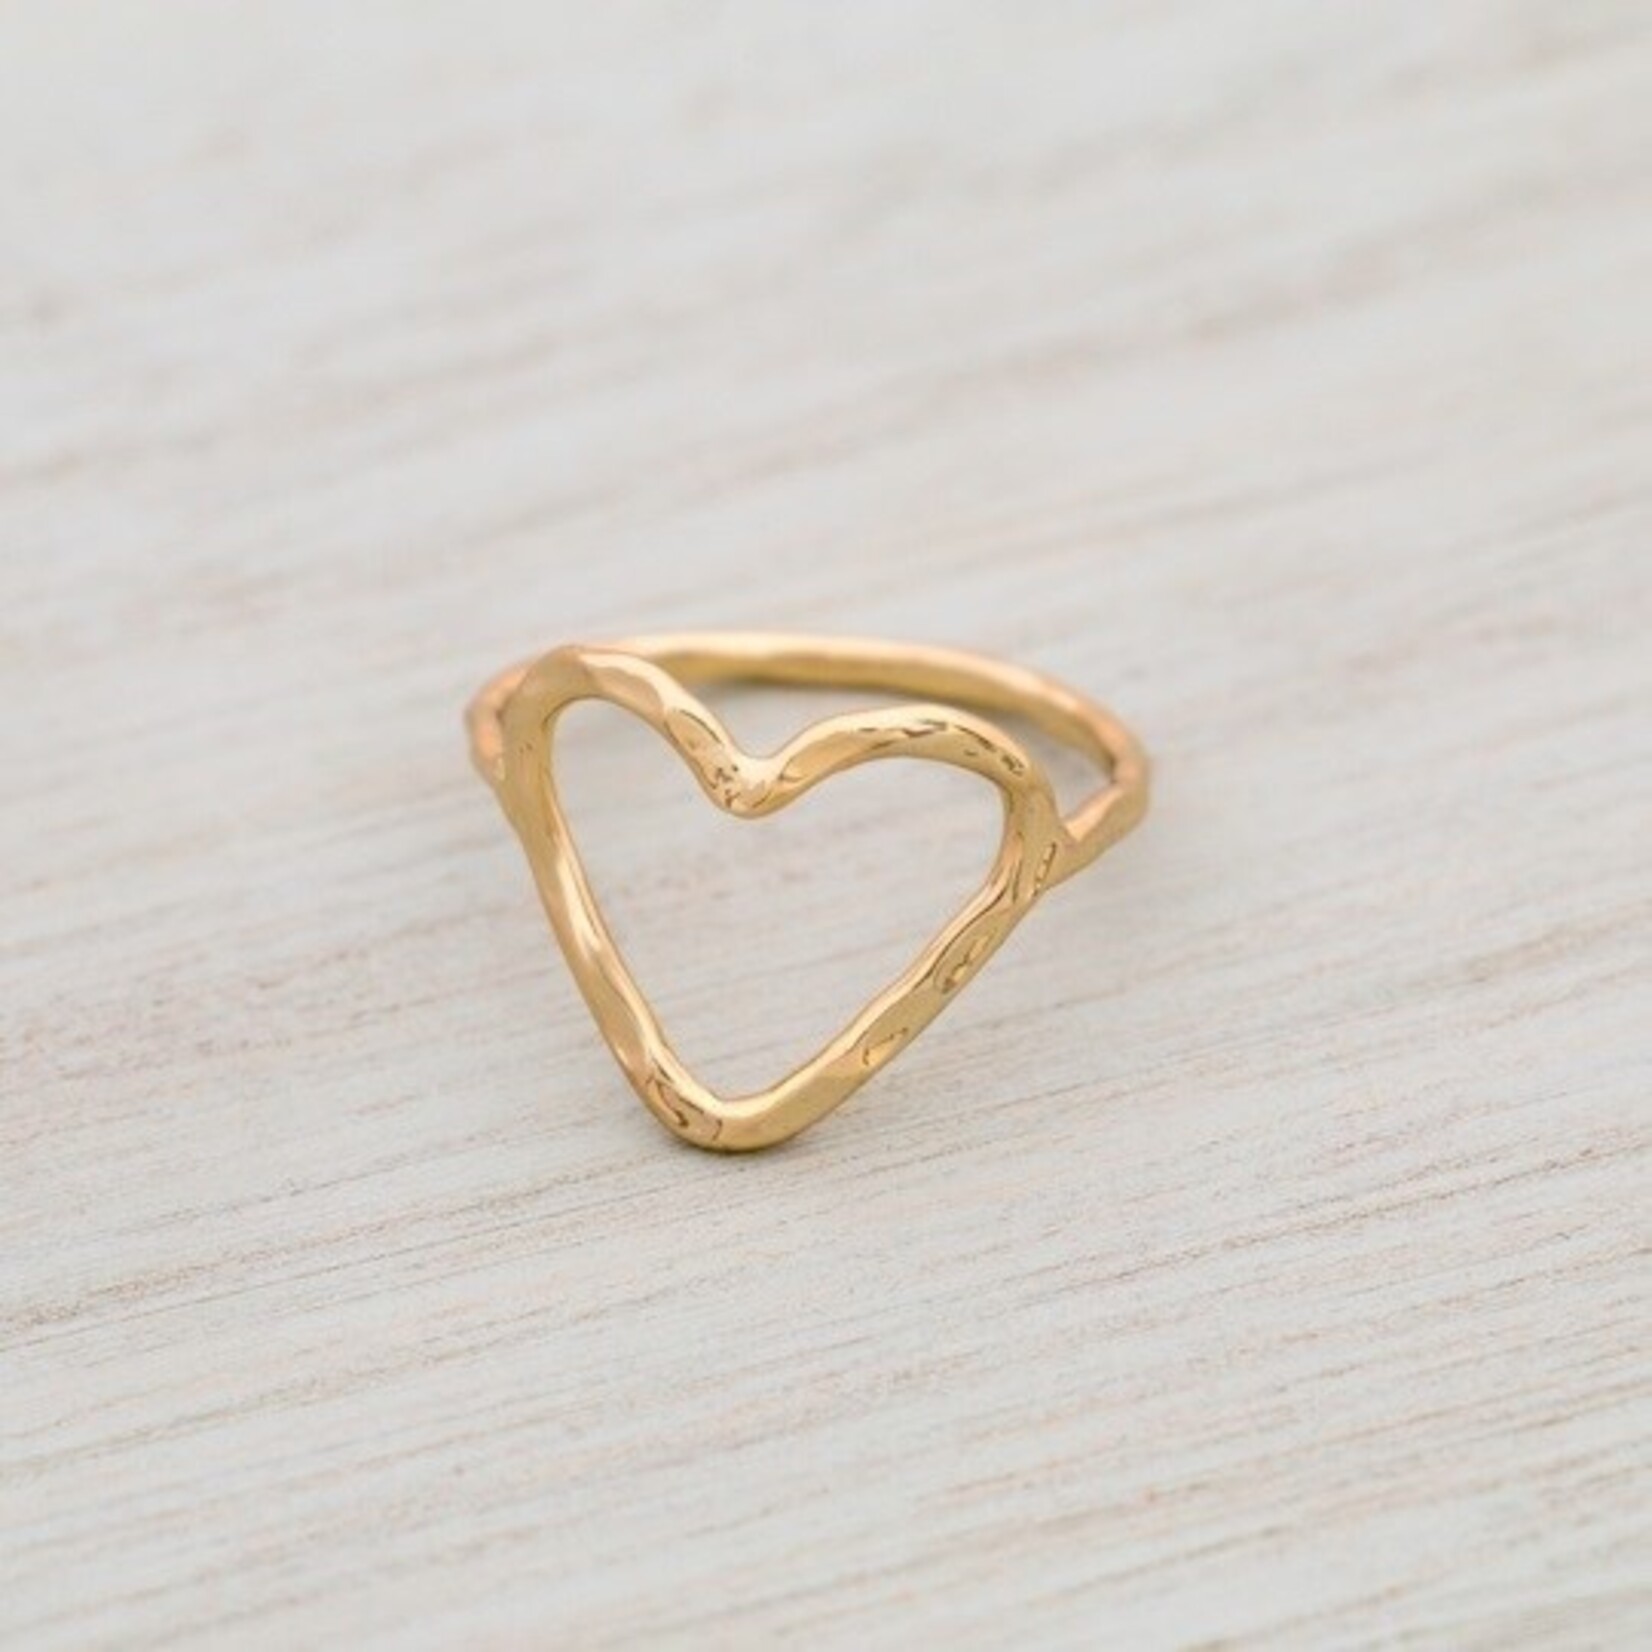 Glee Jewelry Amore Ring